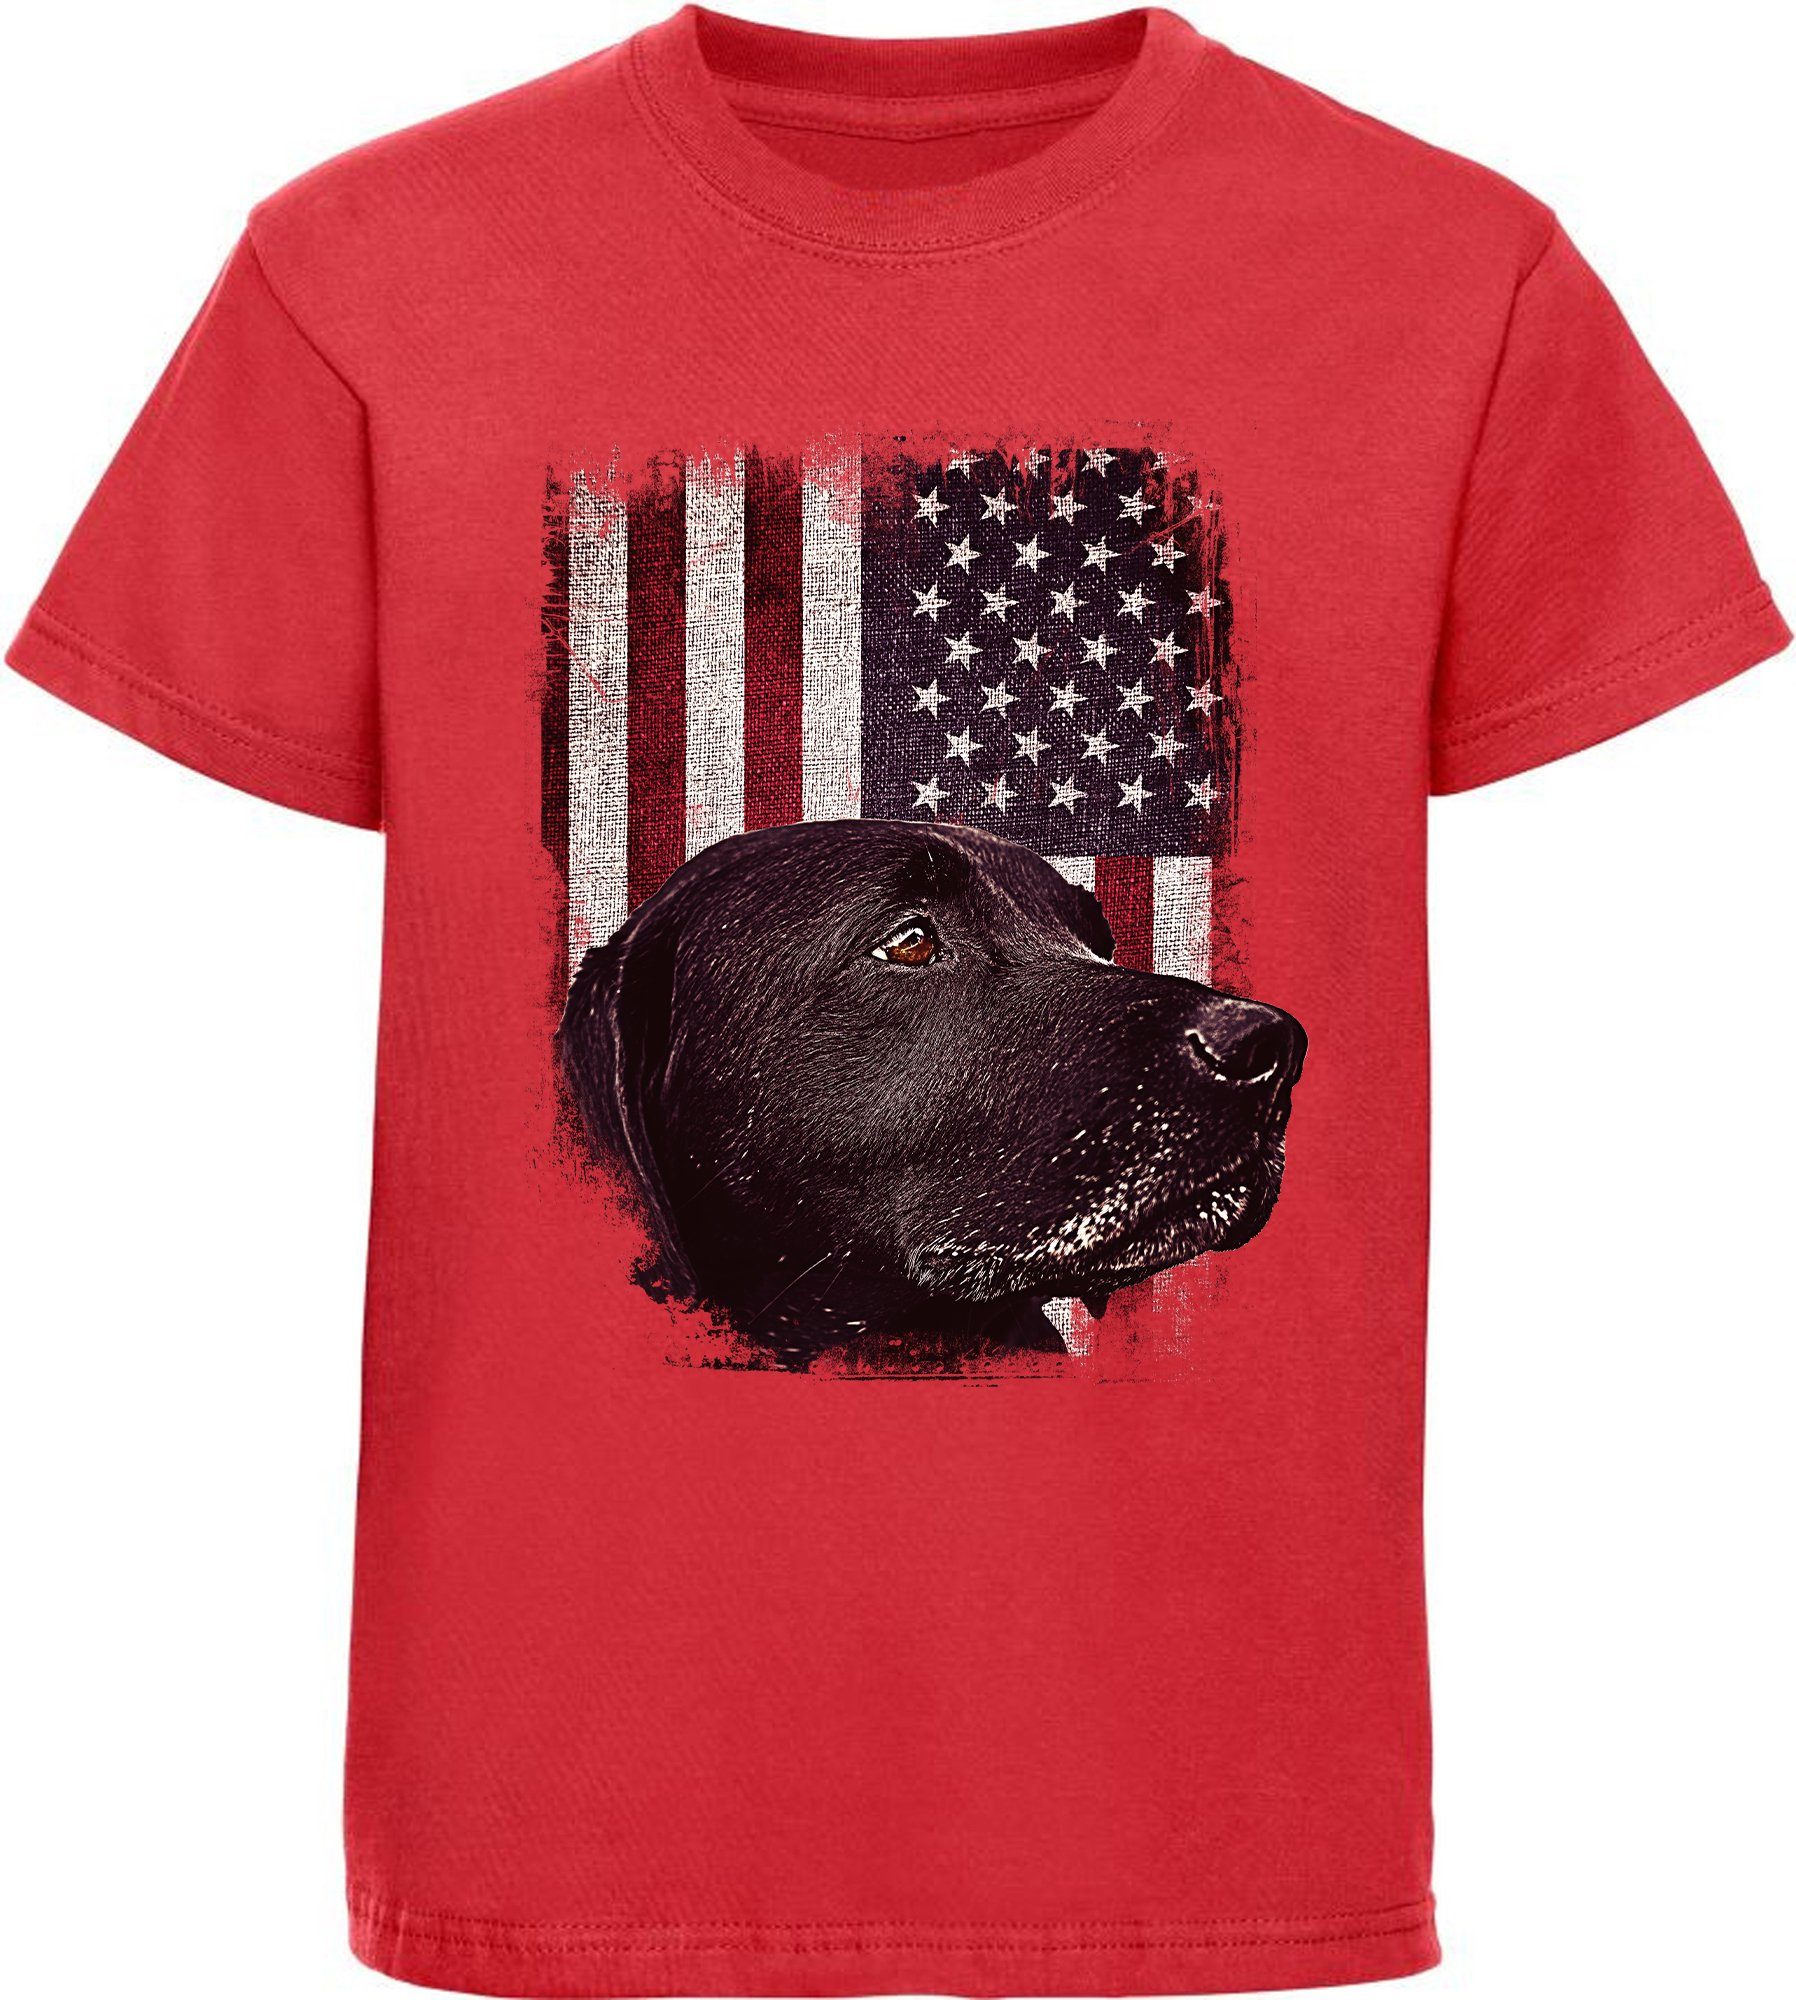 MyDesign24 T-Shirt Kinder Hunde - vor Aufdruck, Print Shirt rot i246 bedruckt Labrador schwarzer USA mit Flagge Baumwollshirt